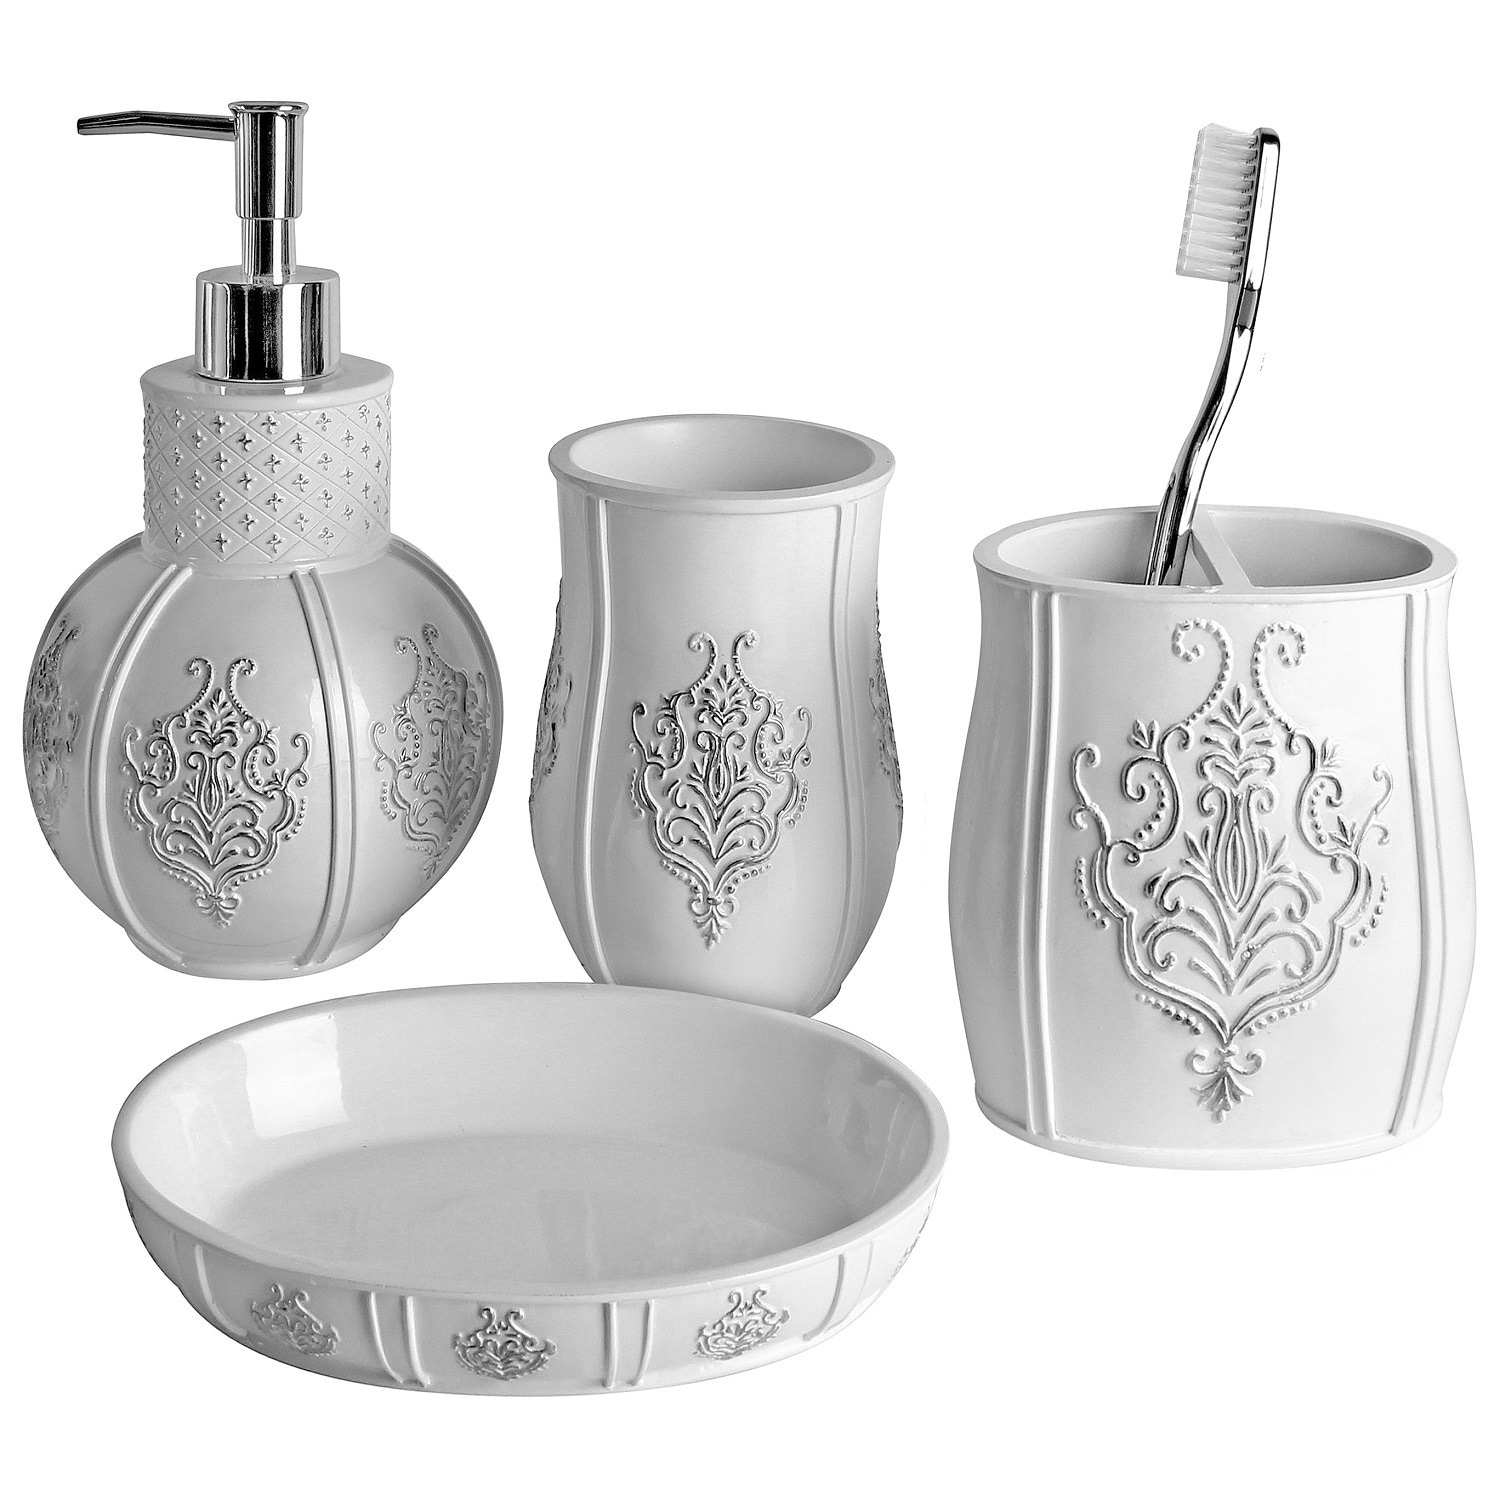 4 Piece Ceramic Luxury Bath Accessory Set with Stunning Sequin Accents,  White, BATH ORGANIZATION